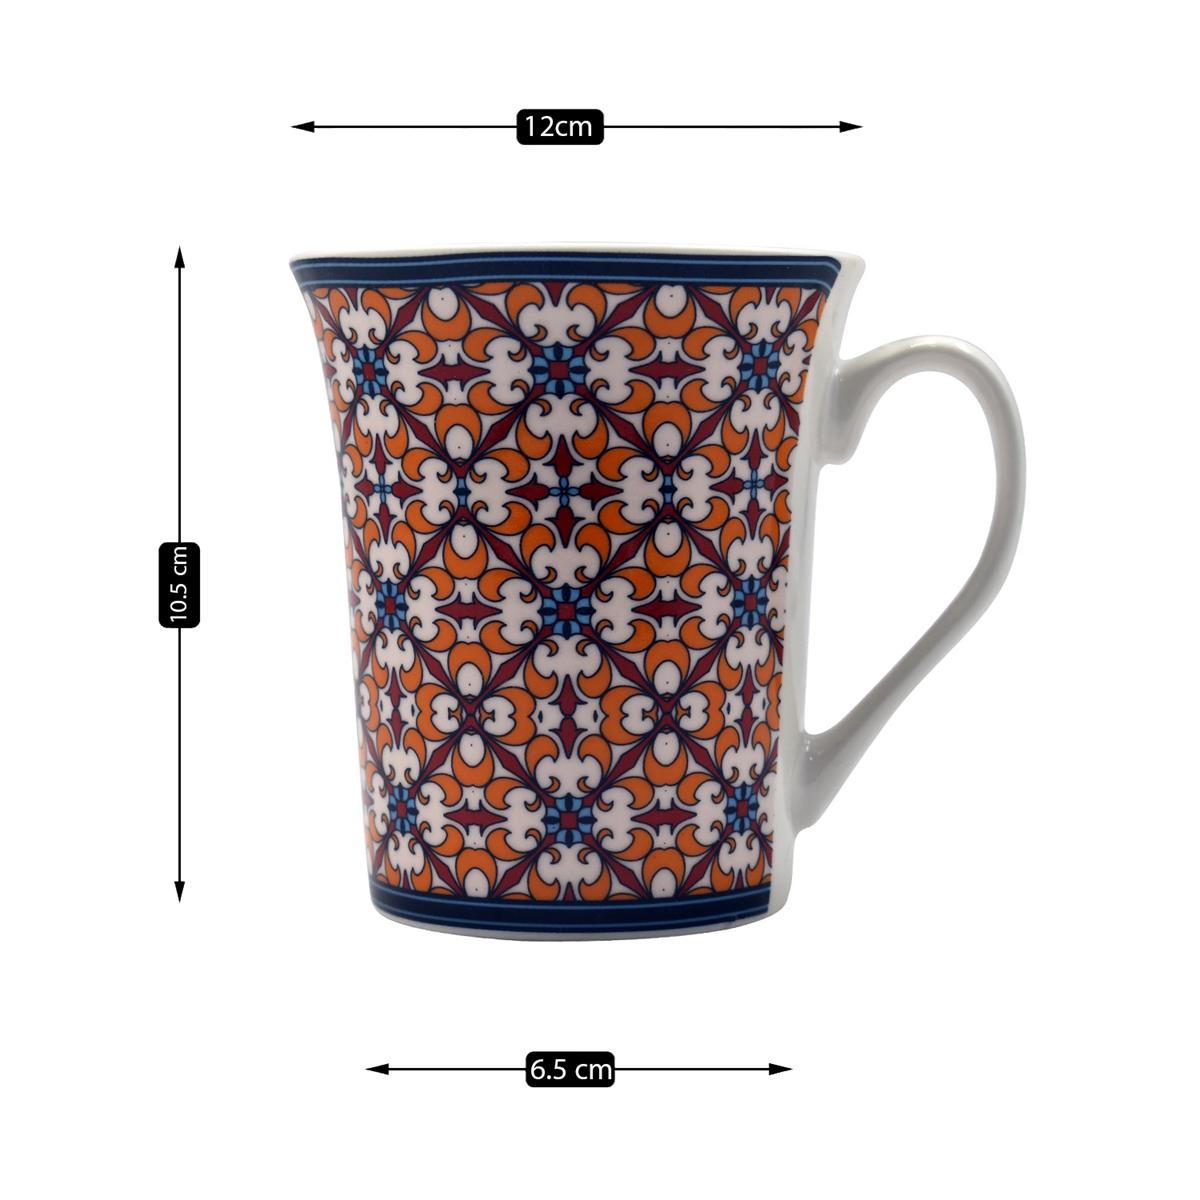 Printed Ceramic Tall Coffee or Tea Mug with handle - 325ml (BPM4430-C)